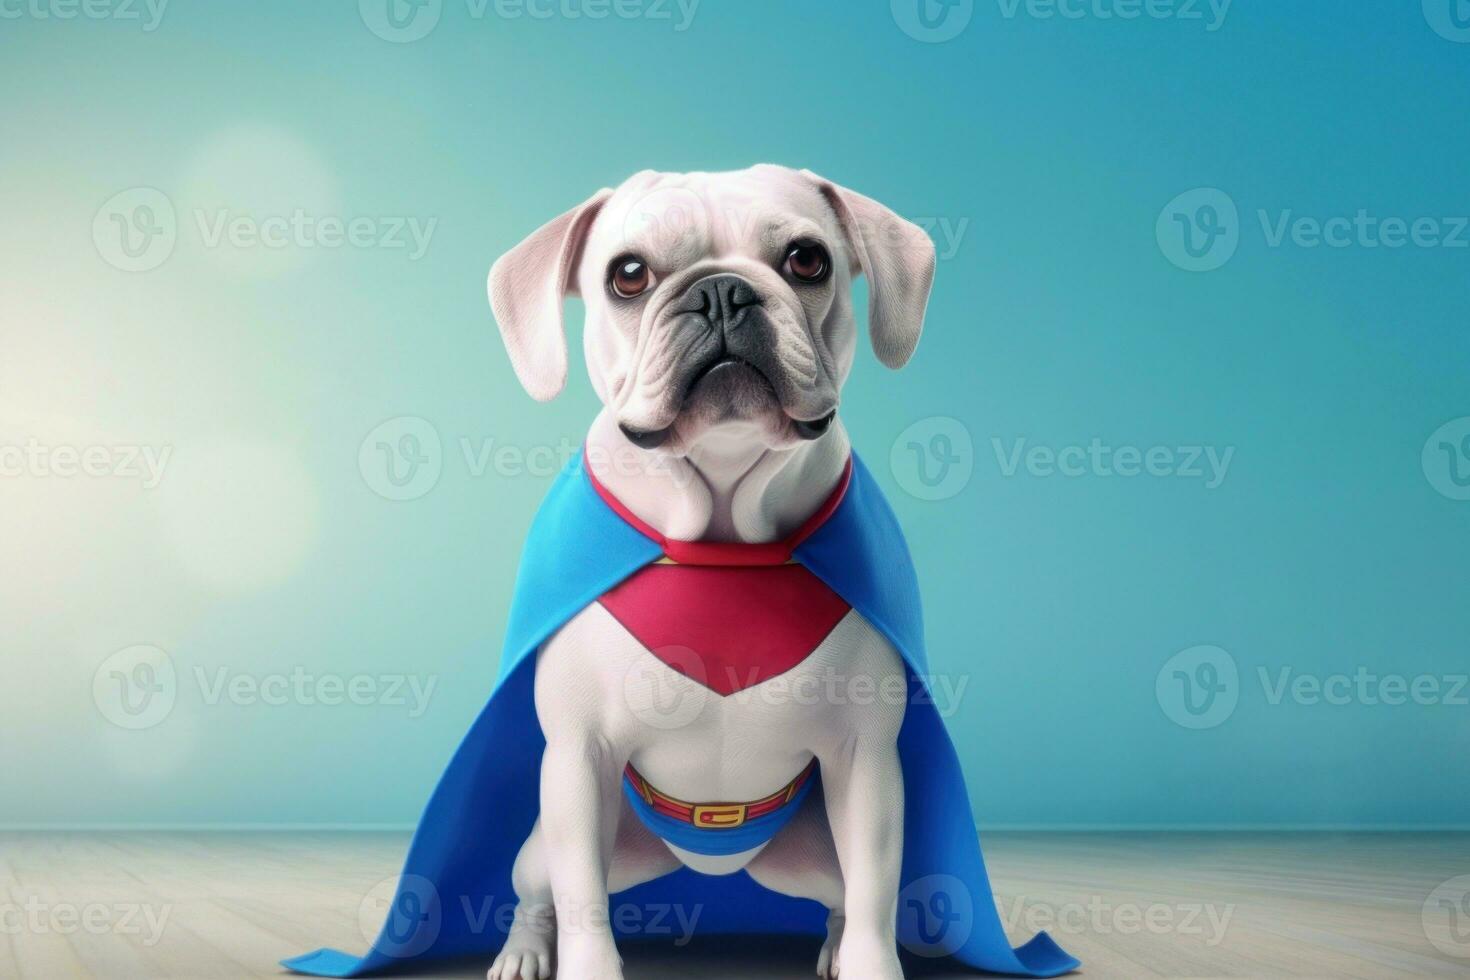 Cute dog superhero mascot. Generate AI photo